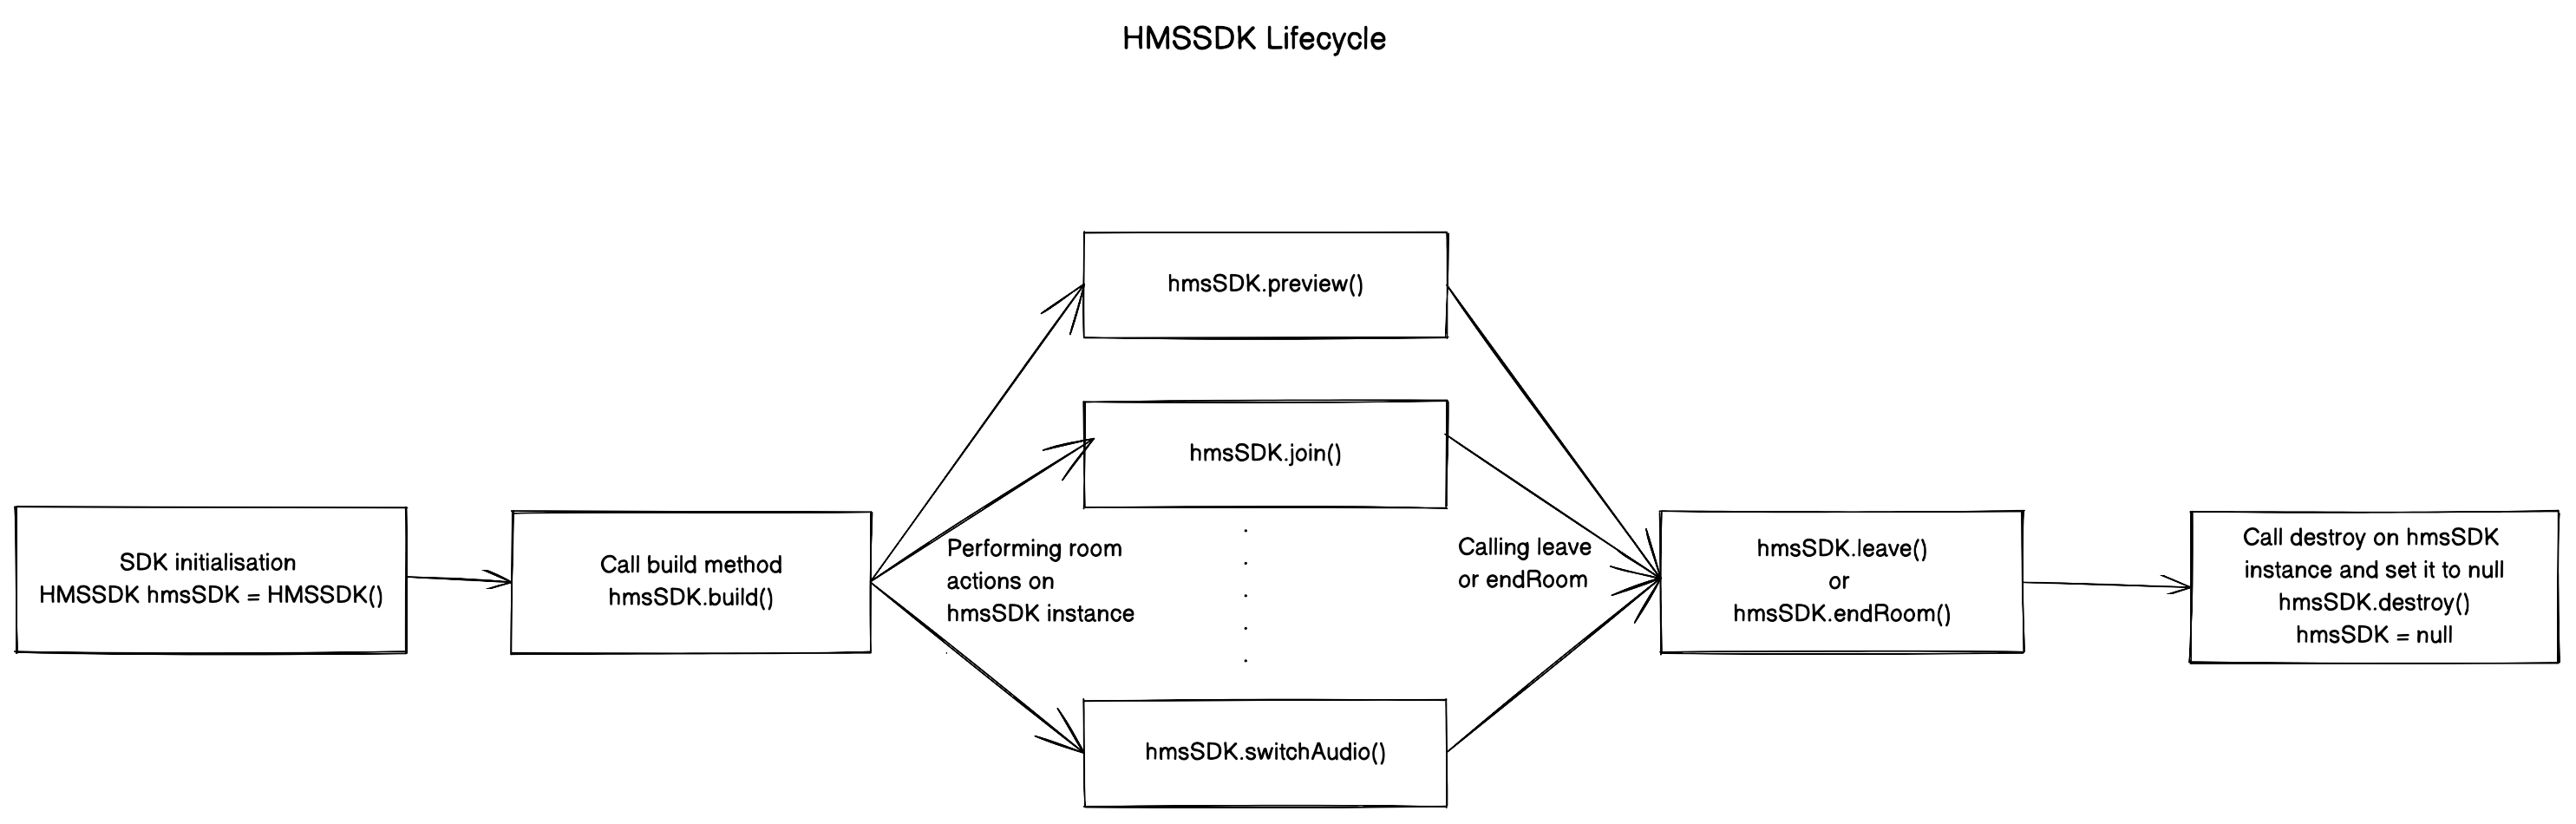 hmssdk-lifecycle